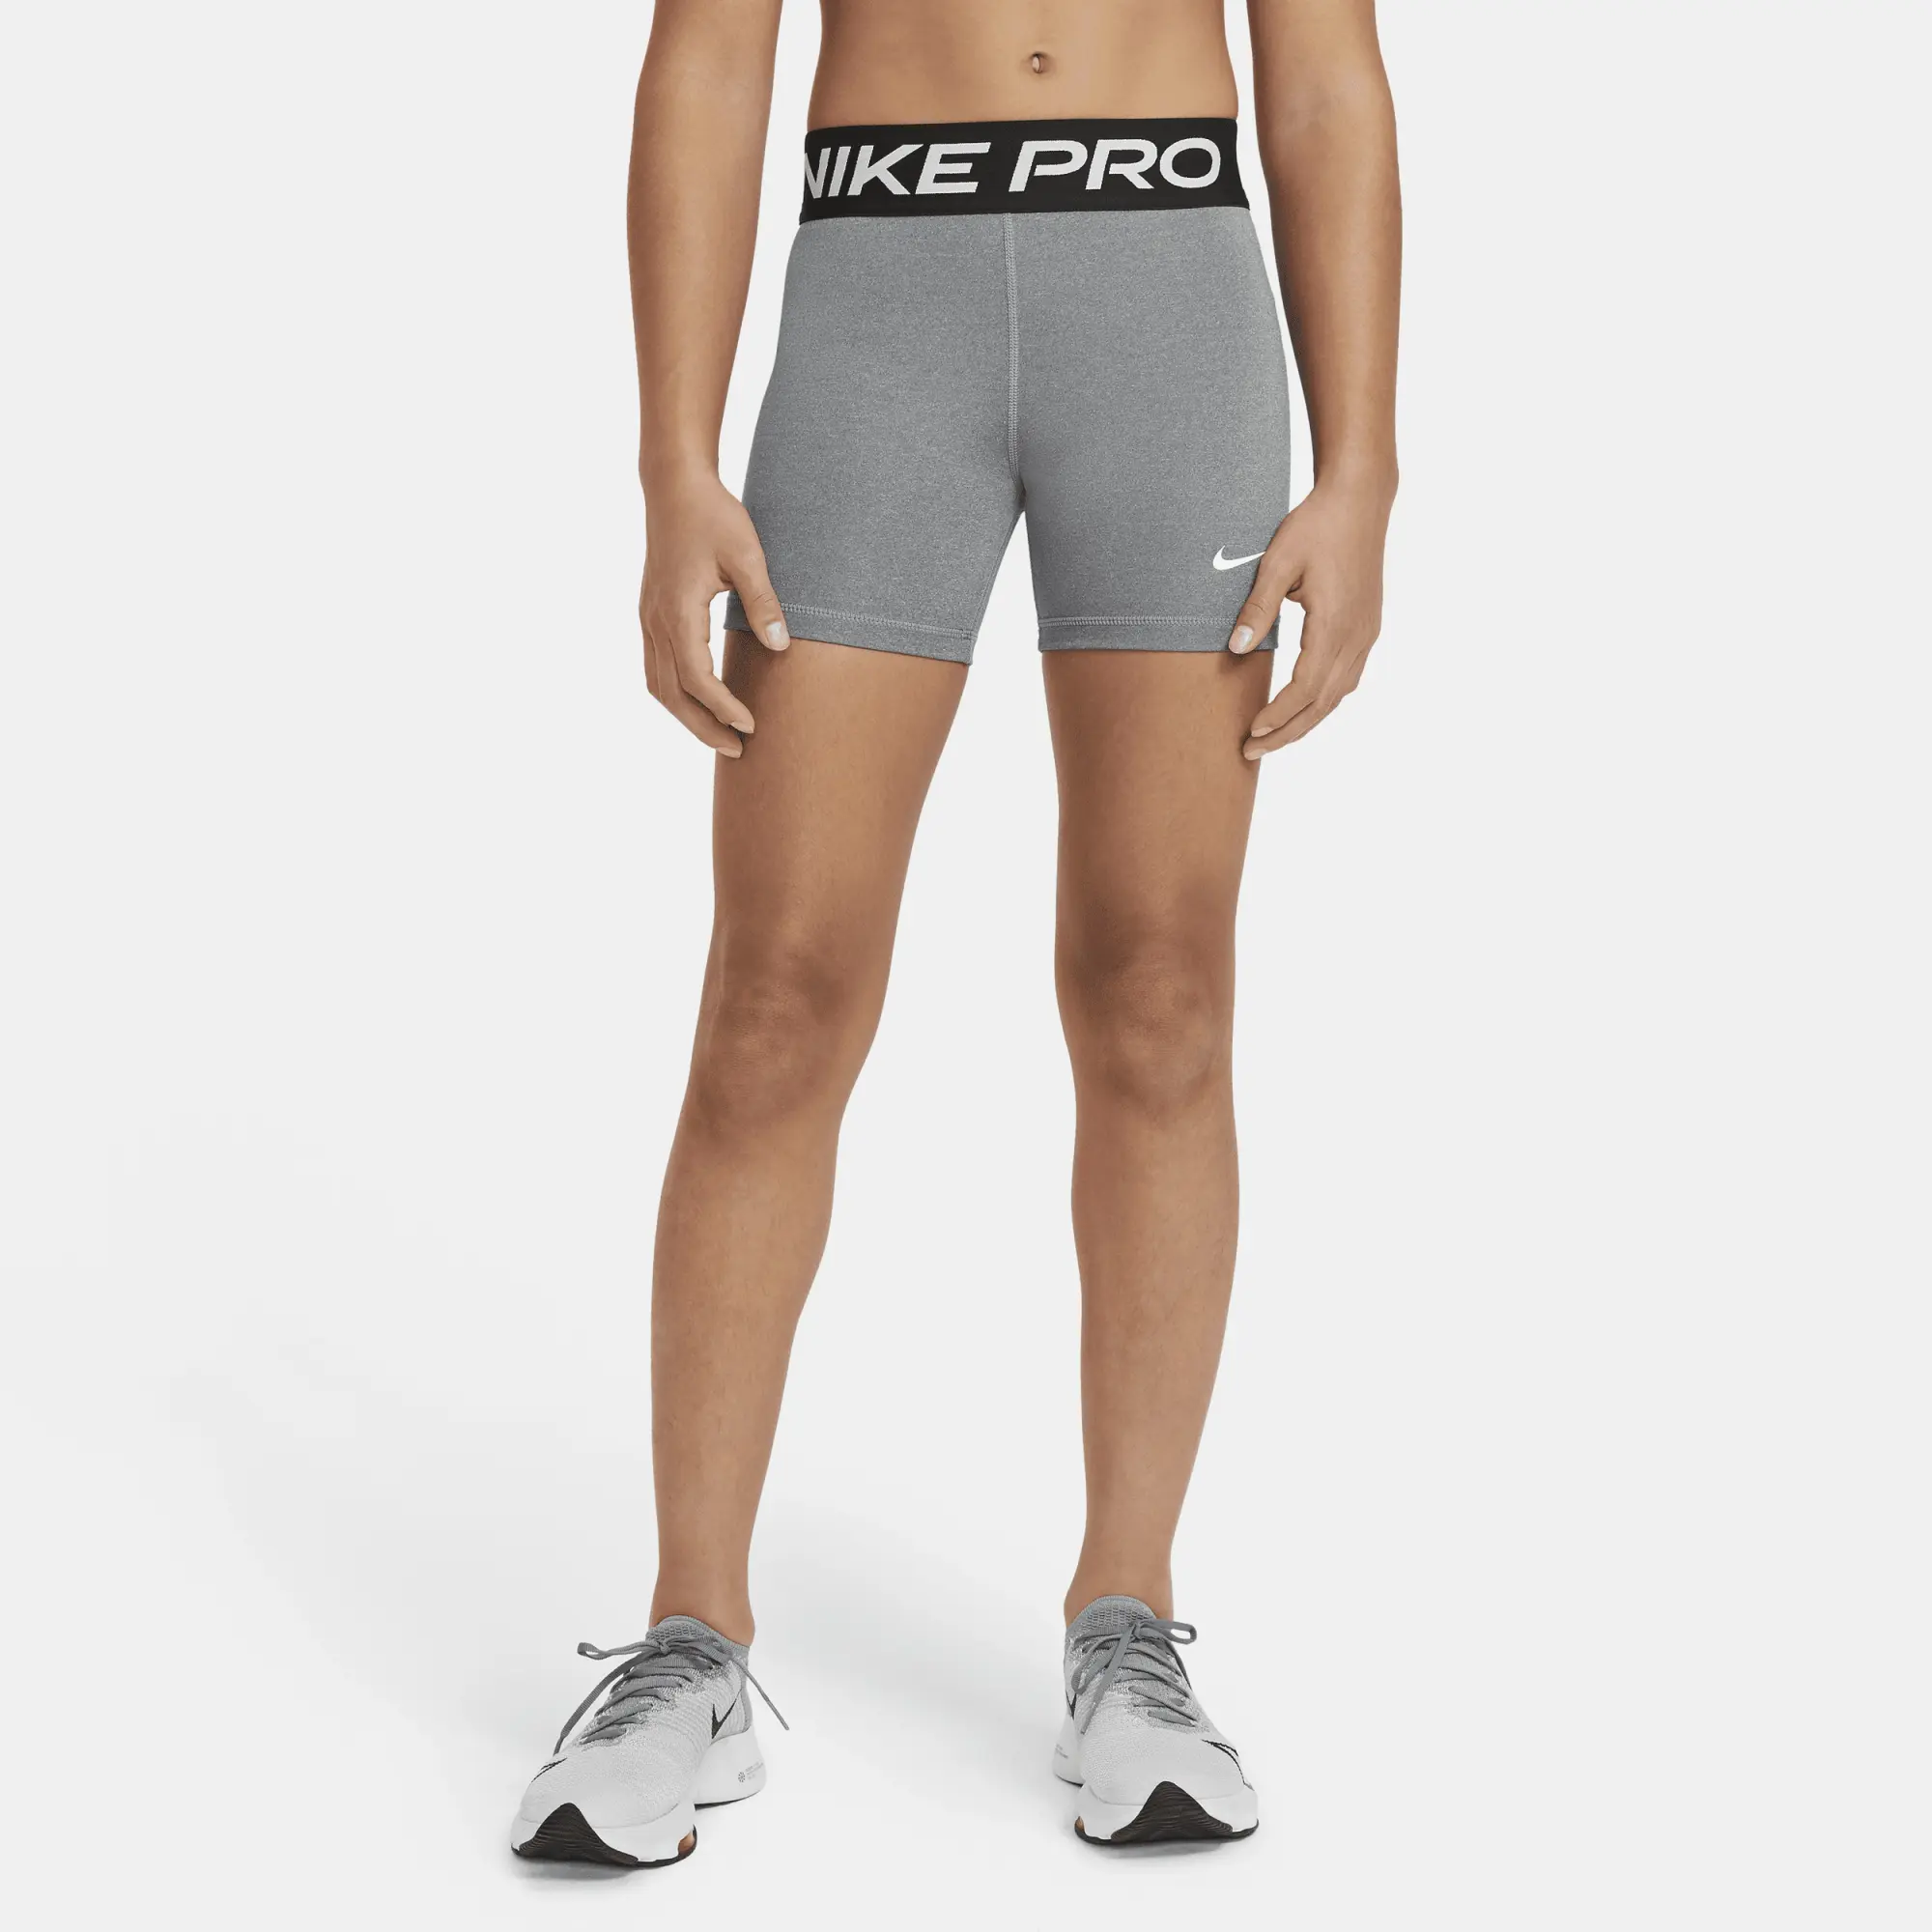 Nike Girls Nike Pro 3 Inch Short - Grey, Grey/White